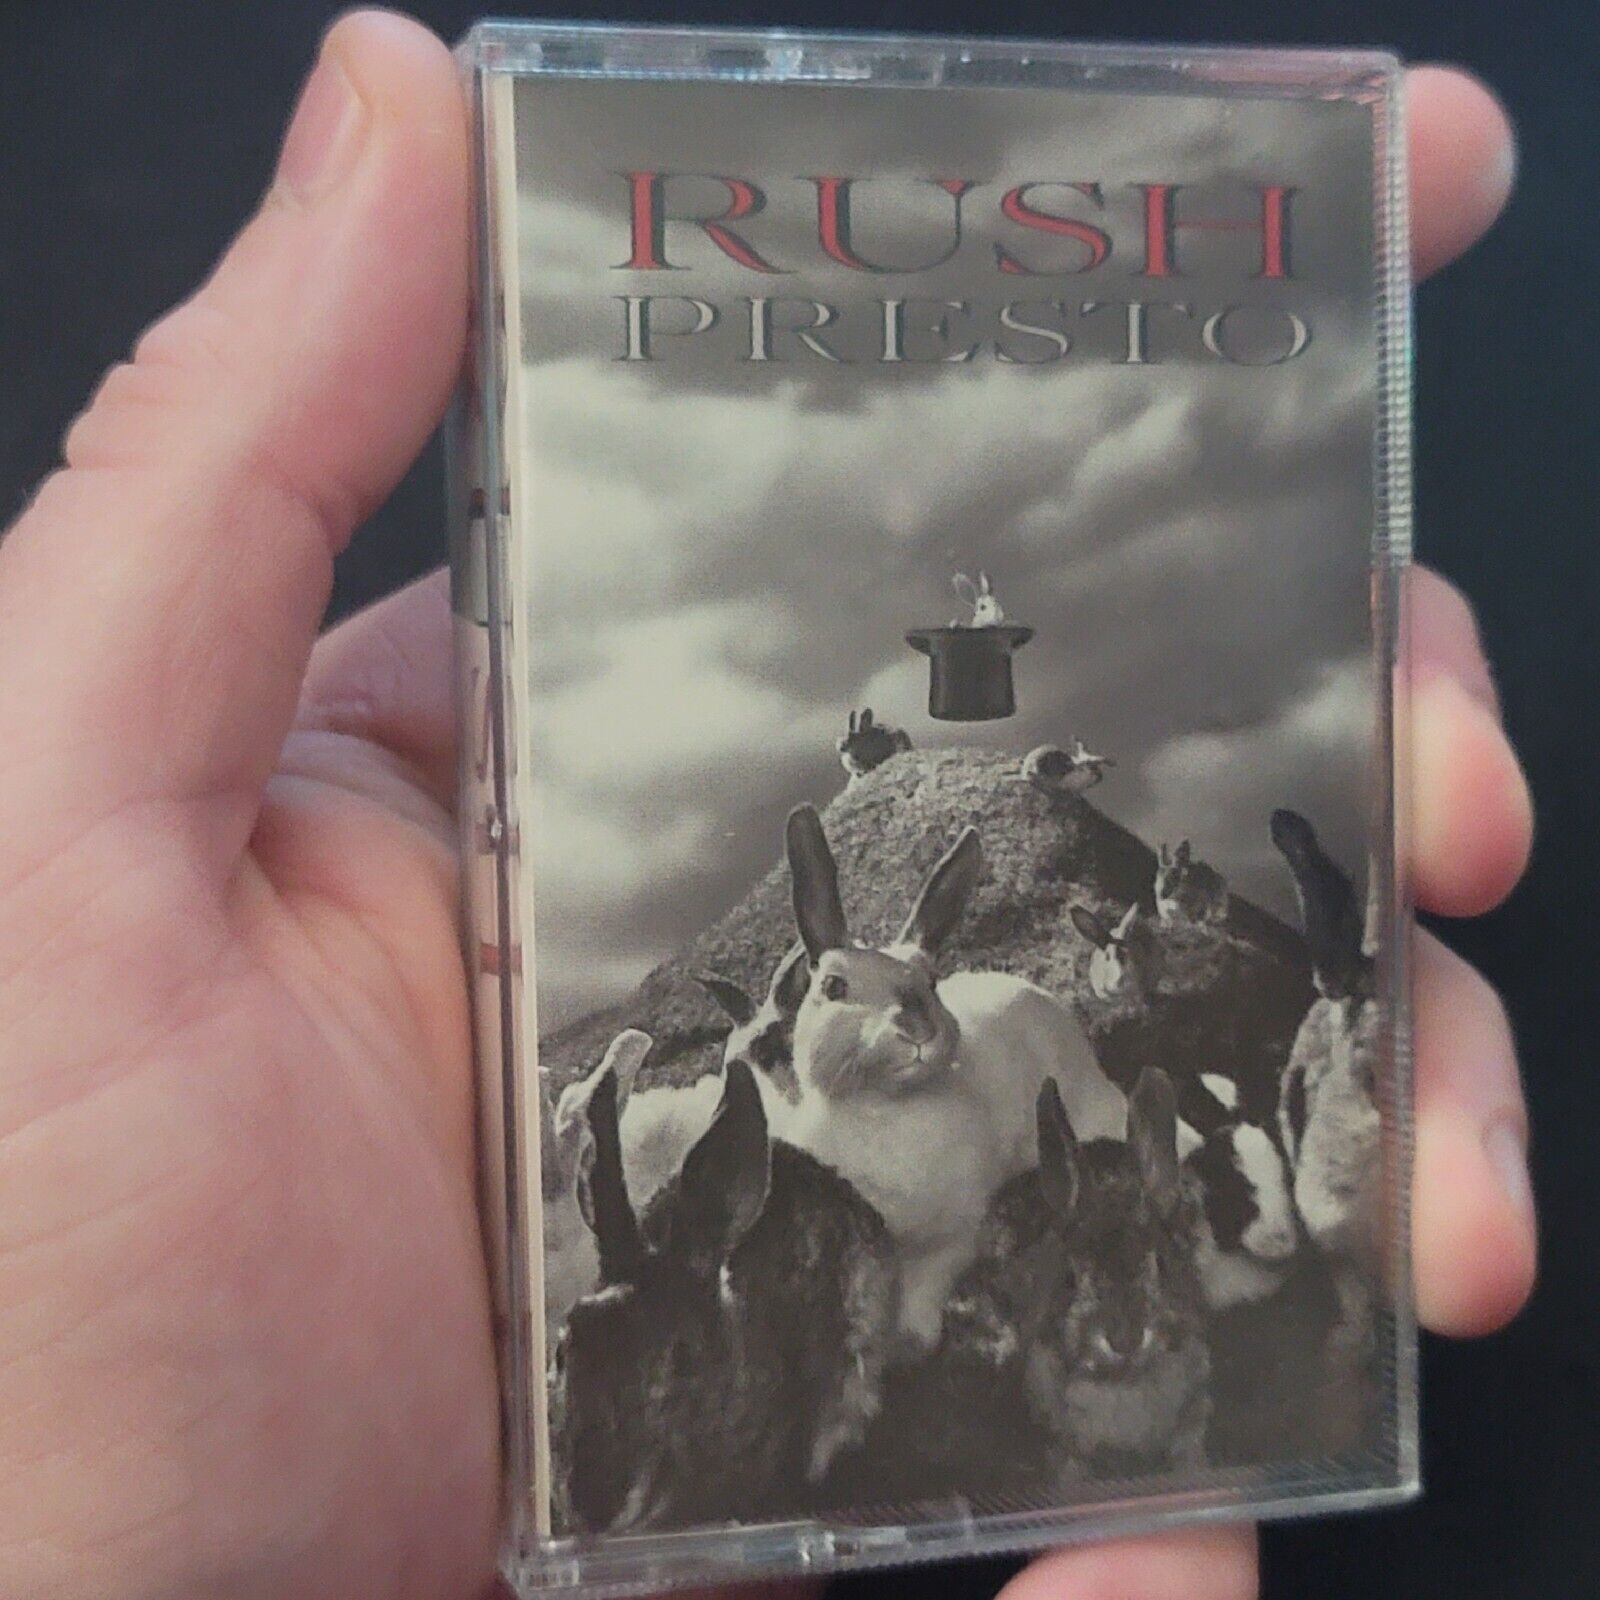 RUSH - Presto 1989 (Audio Cassette) Atlantic Records 82040-4